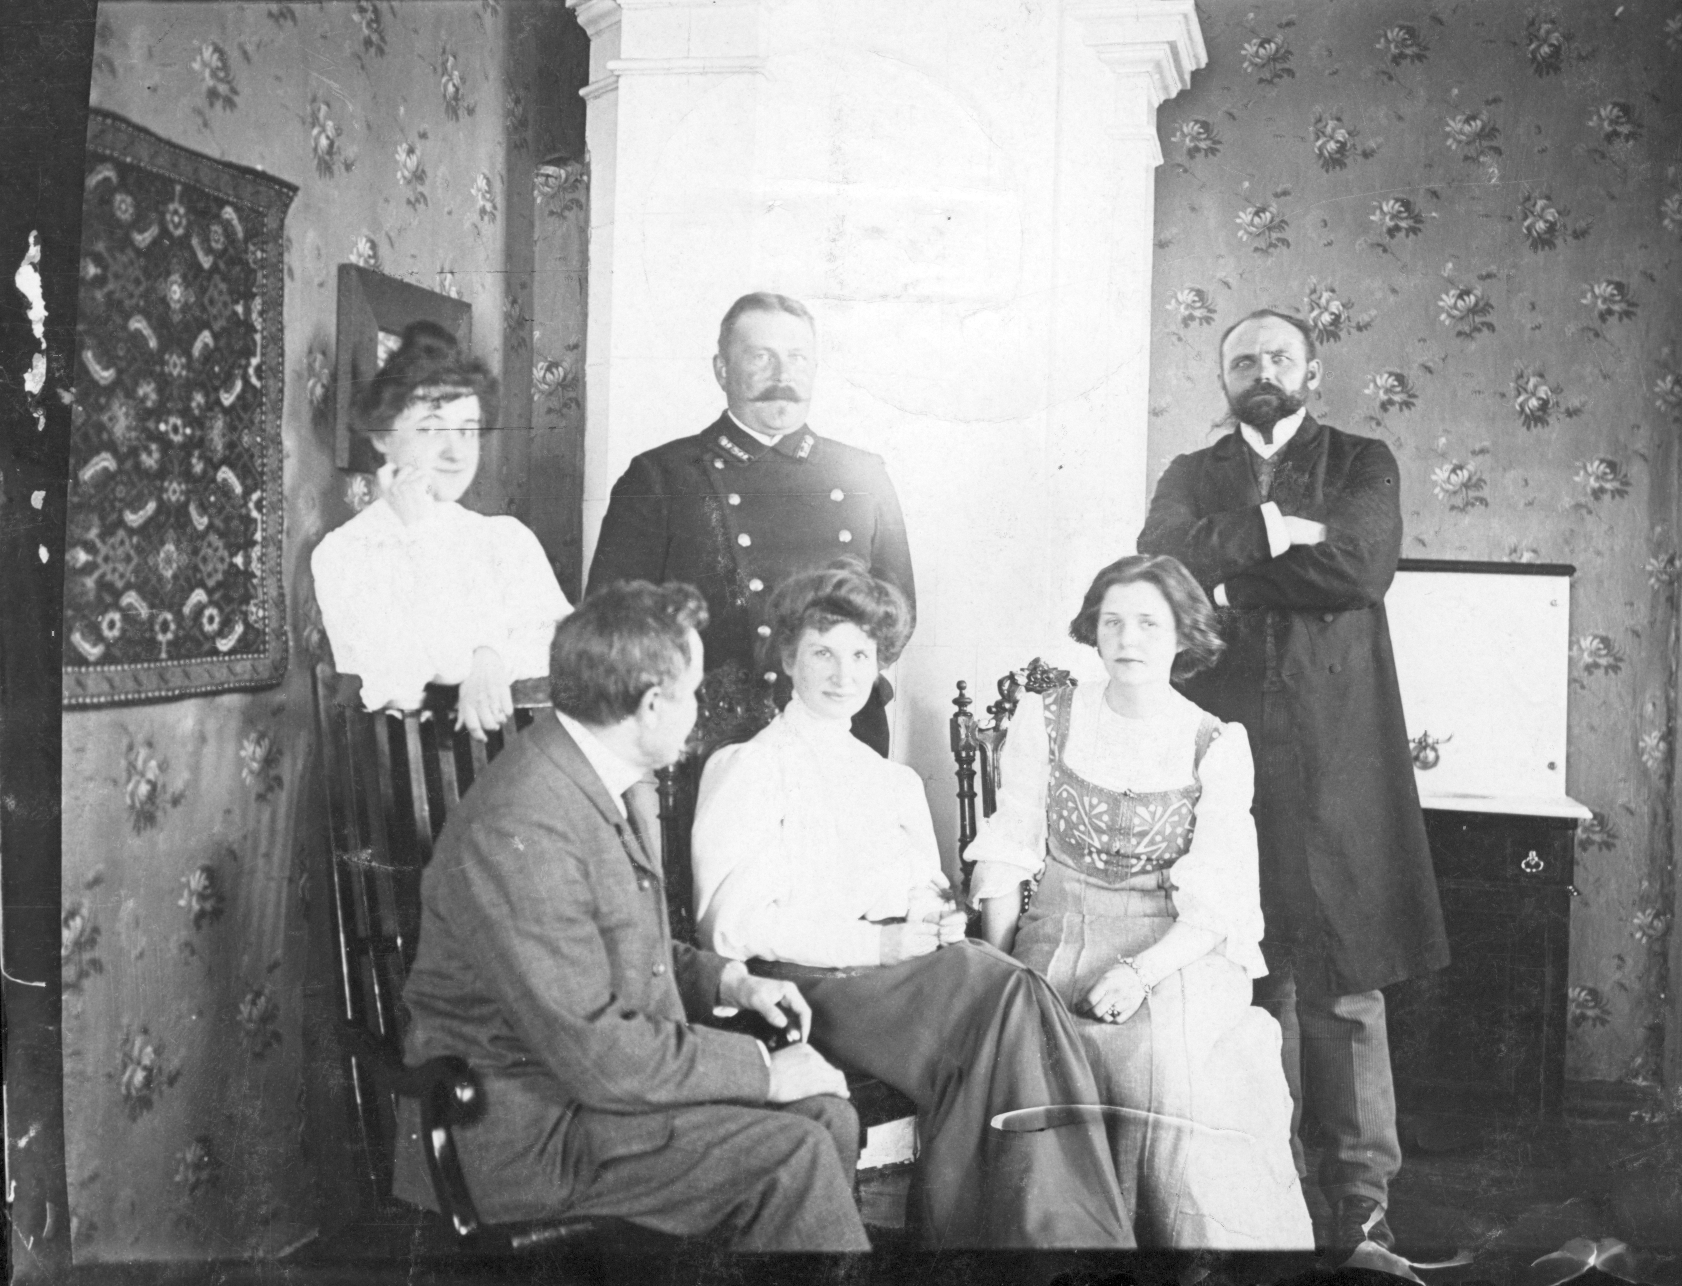 Group picture - left: 1. Salme Hermann 2. Karl Koppel 3. Dr. a. Paldrock 4. Paula Brehm 5. Linda Paldrock, birth. Island 6. Ants Laikmaa